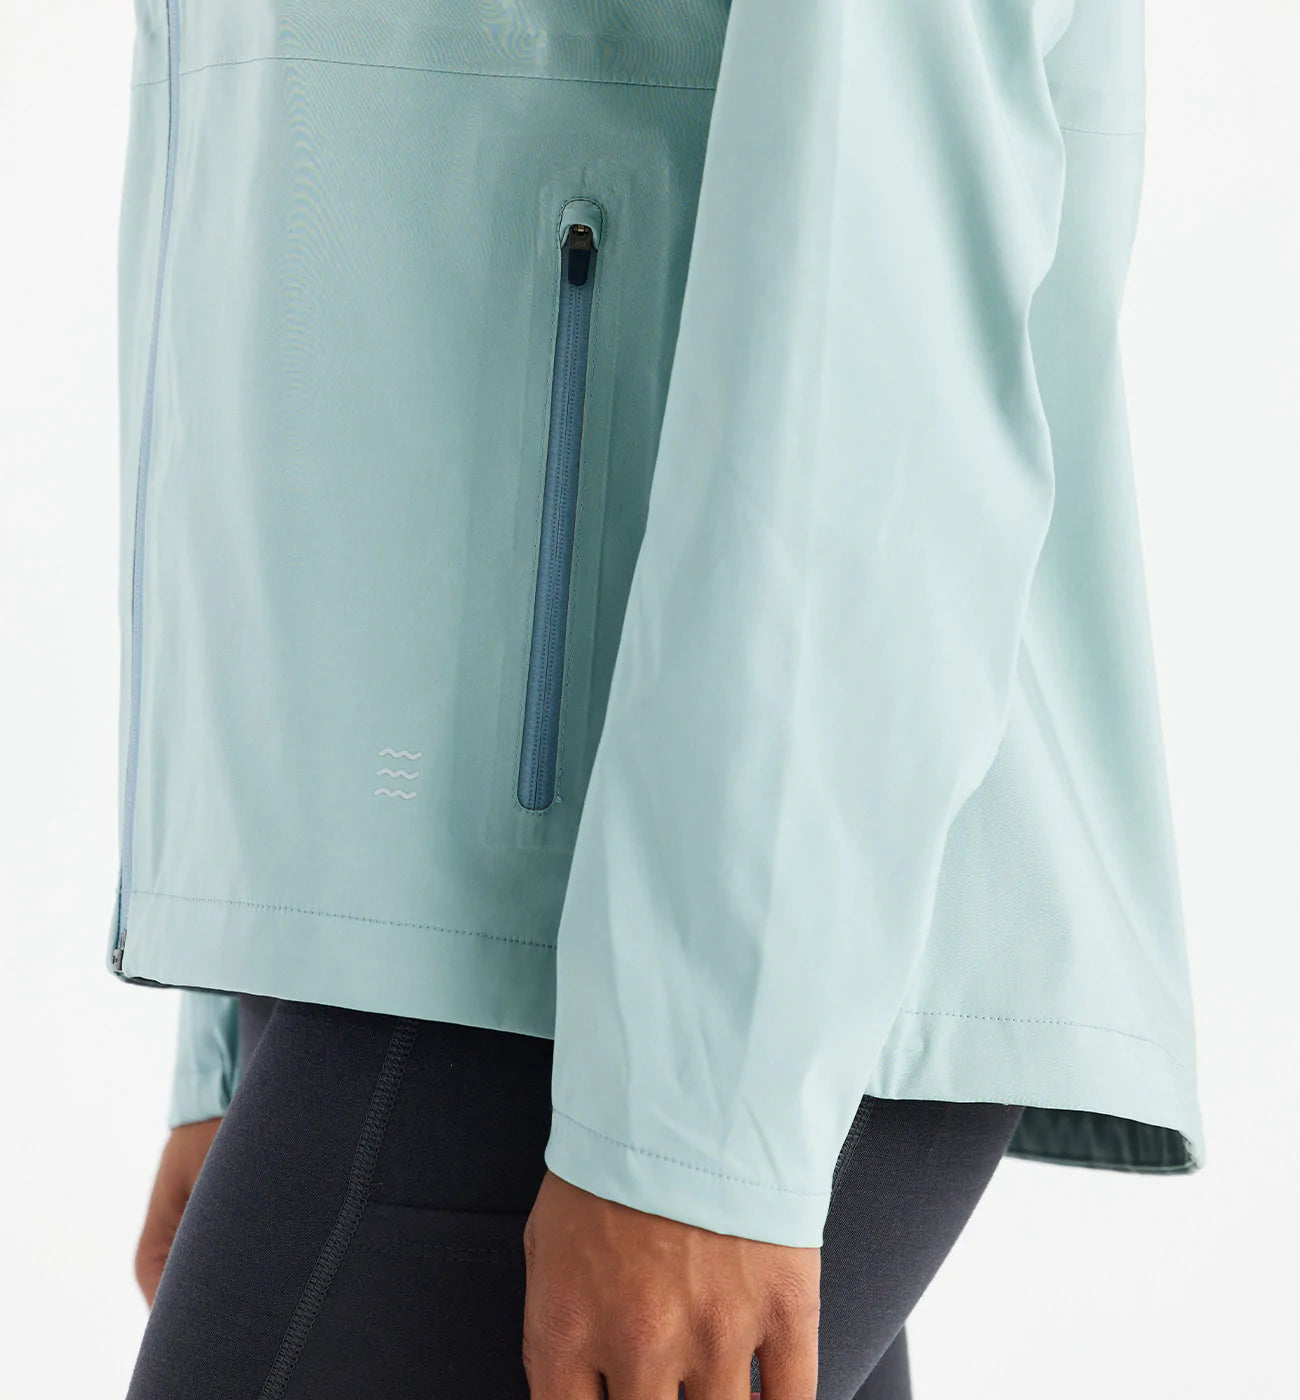 Outerwear: Cloud Rain jacket - Merit Store